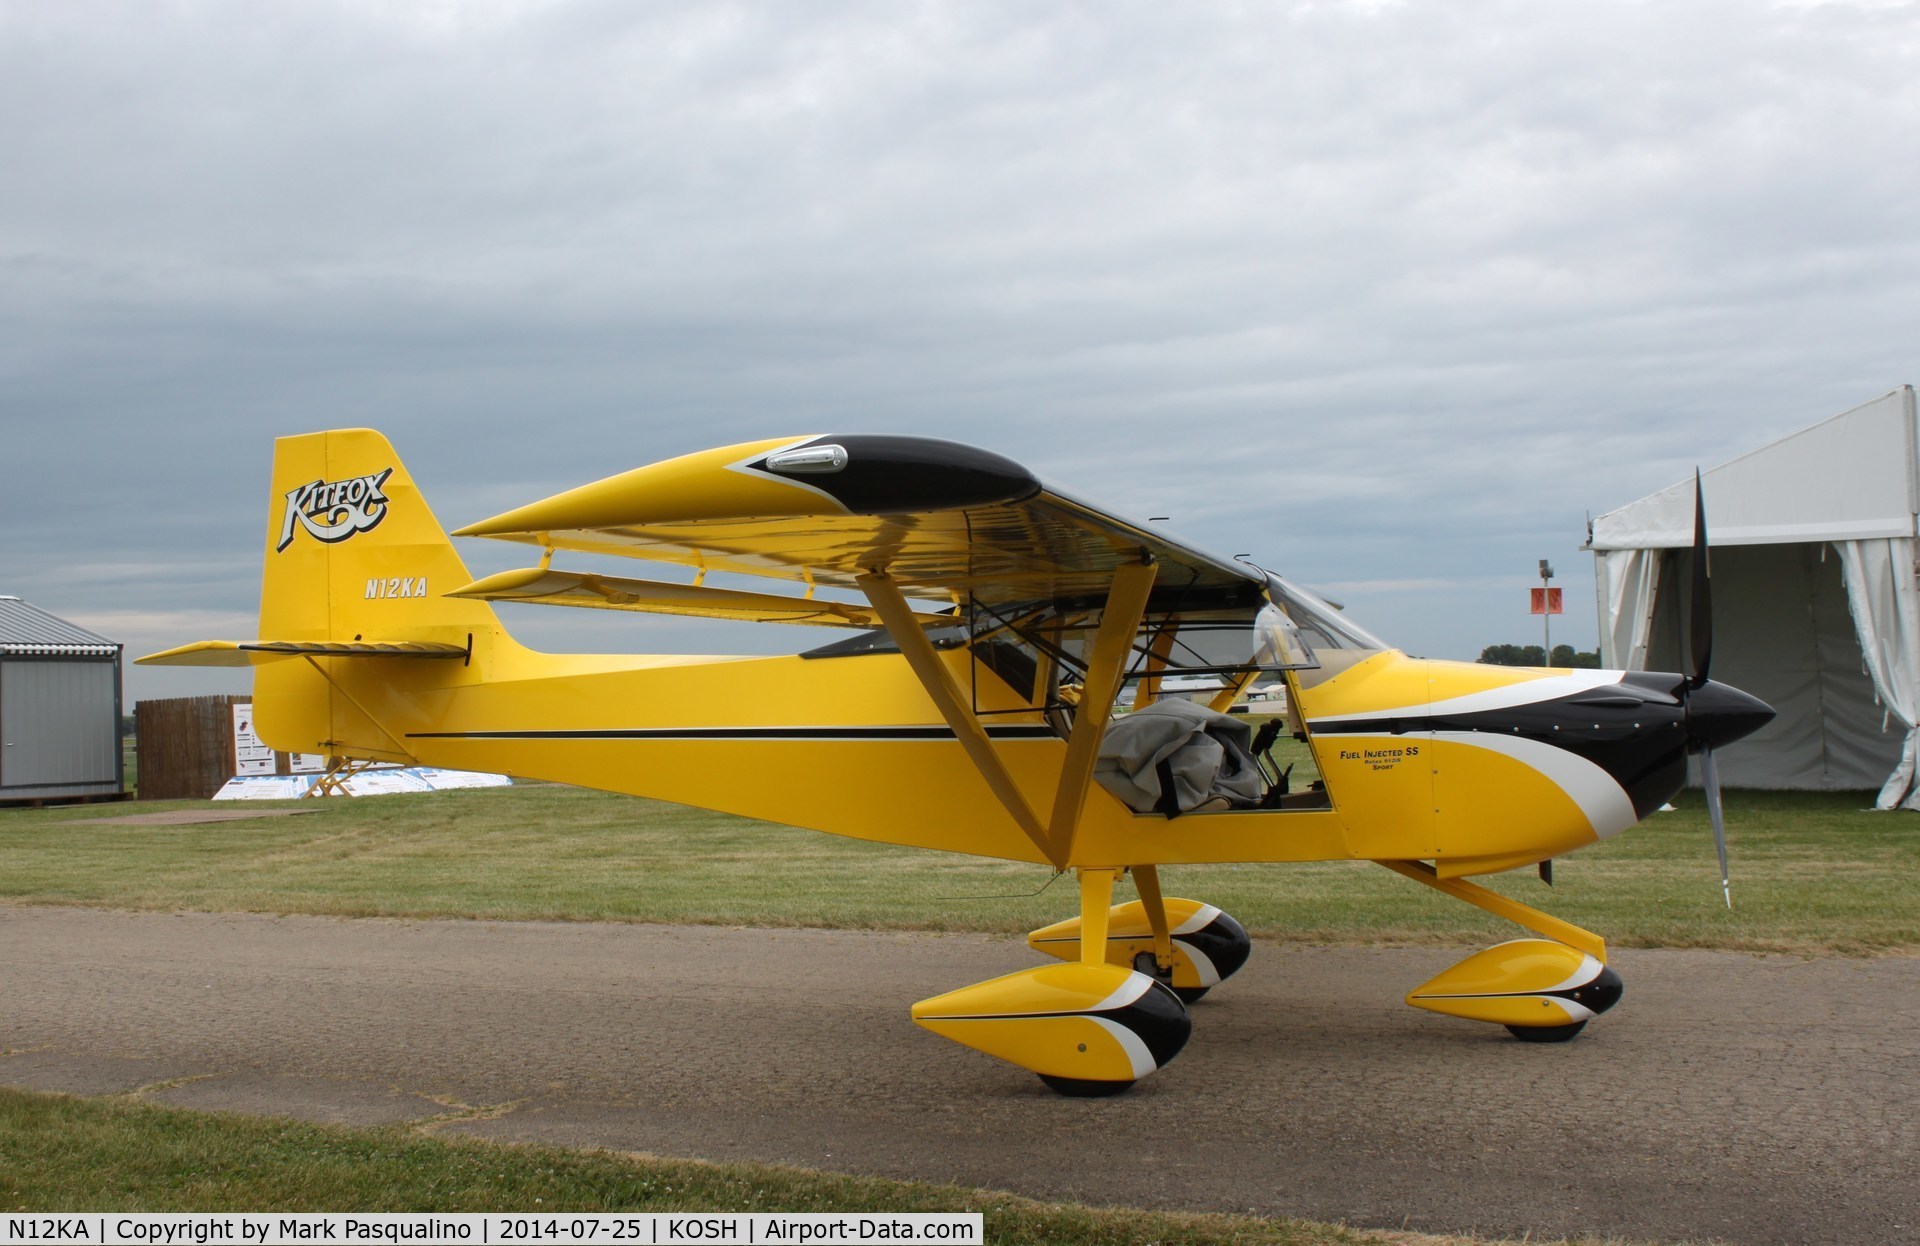 N12KA, 2010 Kitfox Aircraft Super Sport C/N KA0706003, Kitfox Super Sport